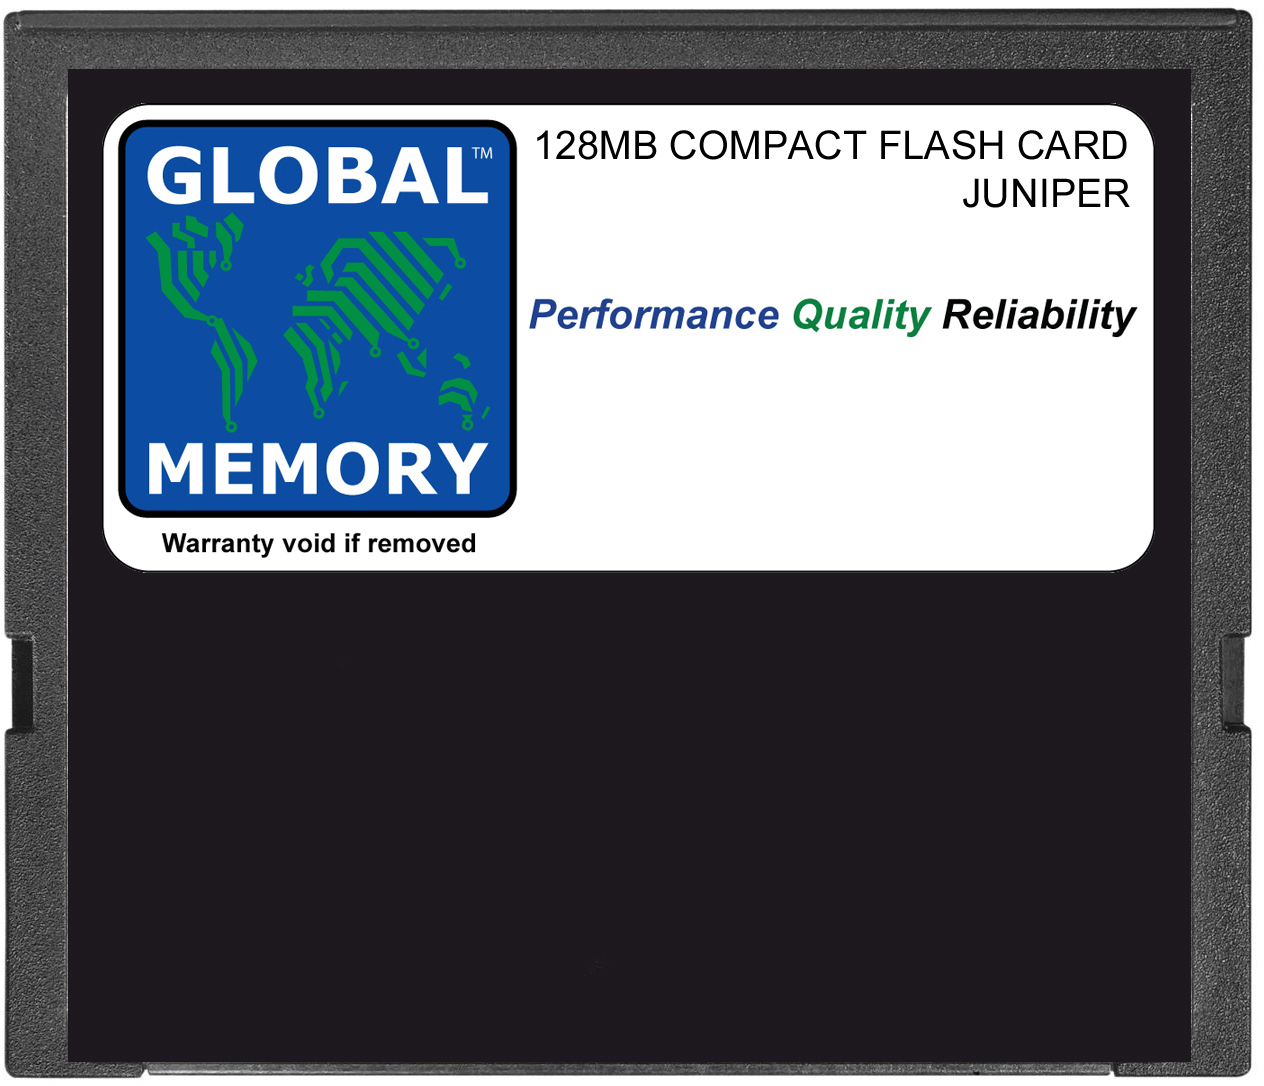 128MB COMPACT FLASH CARD MEMORY FOR JUNIPER J2300 / J4300 / J6300 SERIES ROUTERS (JX-CF-128M-S)